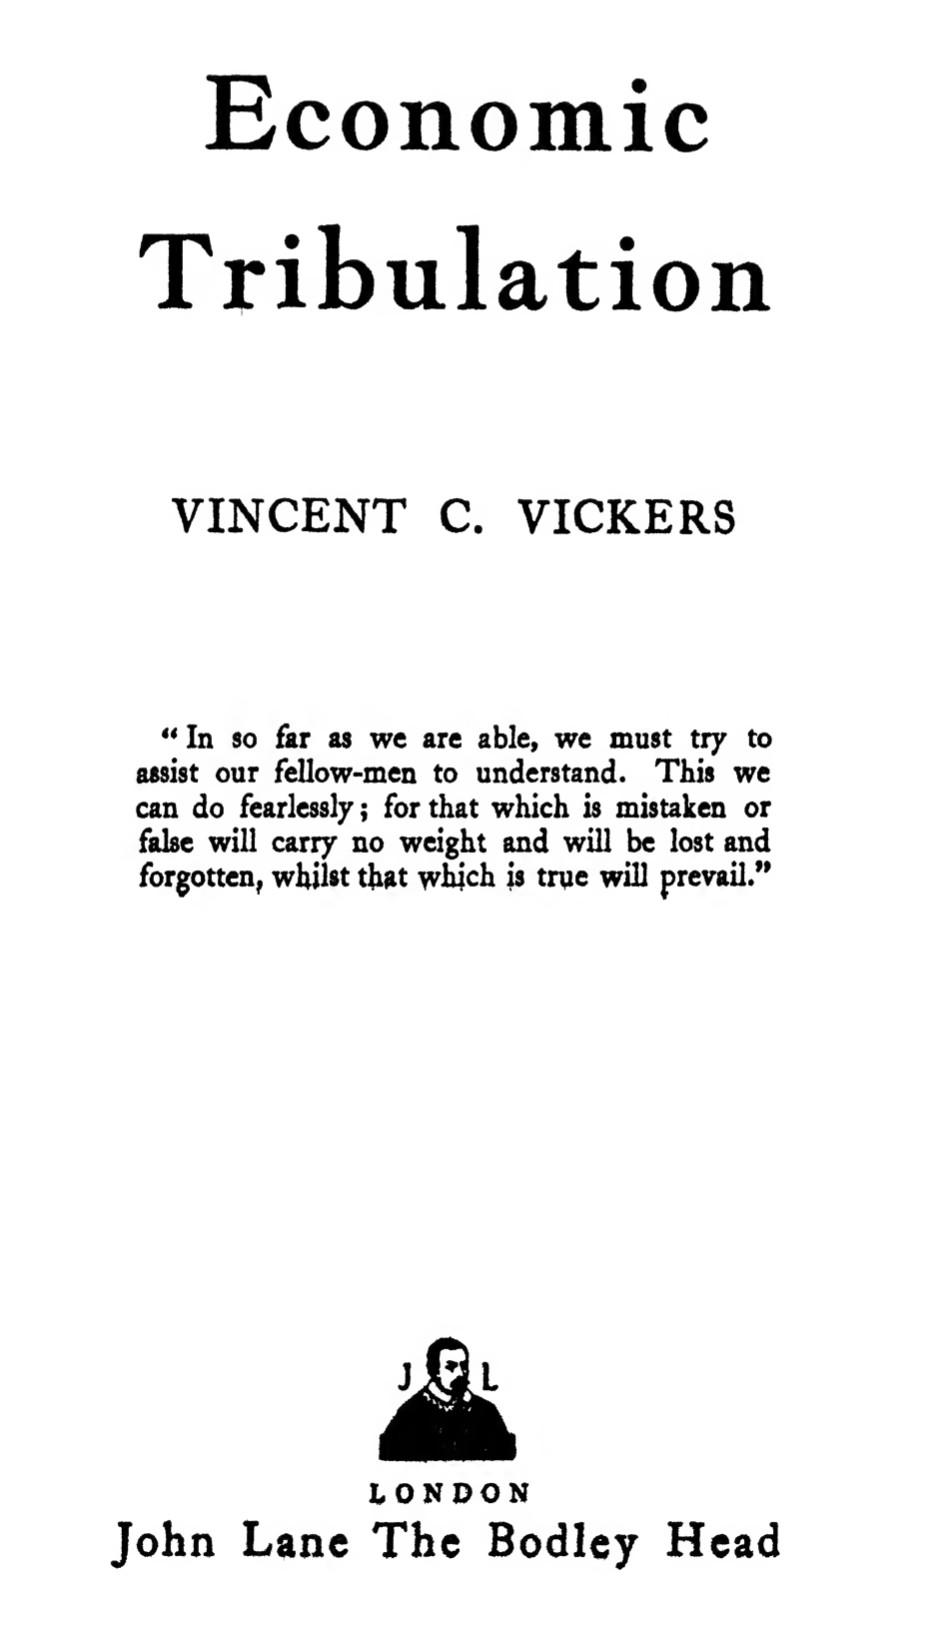 Economic Tribulation (1941) by Vincent Cartwright Vickers